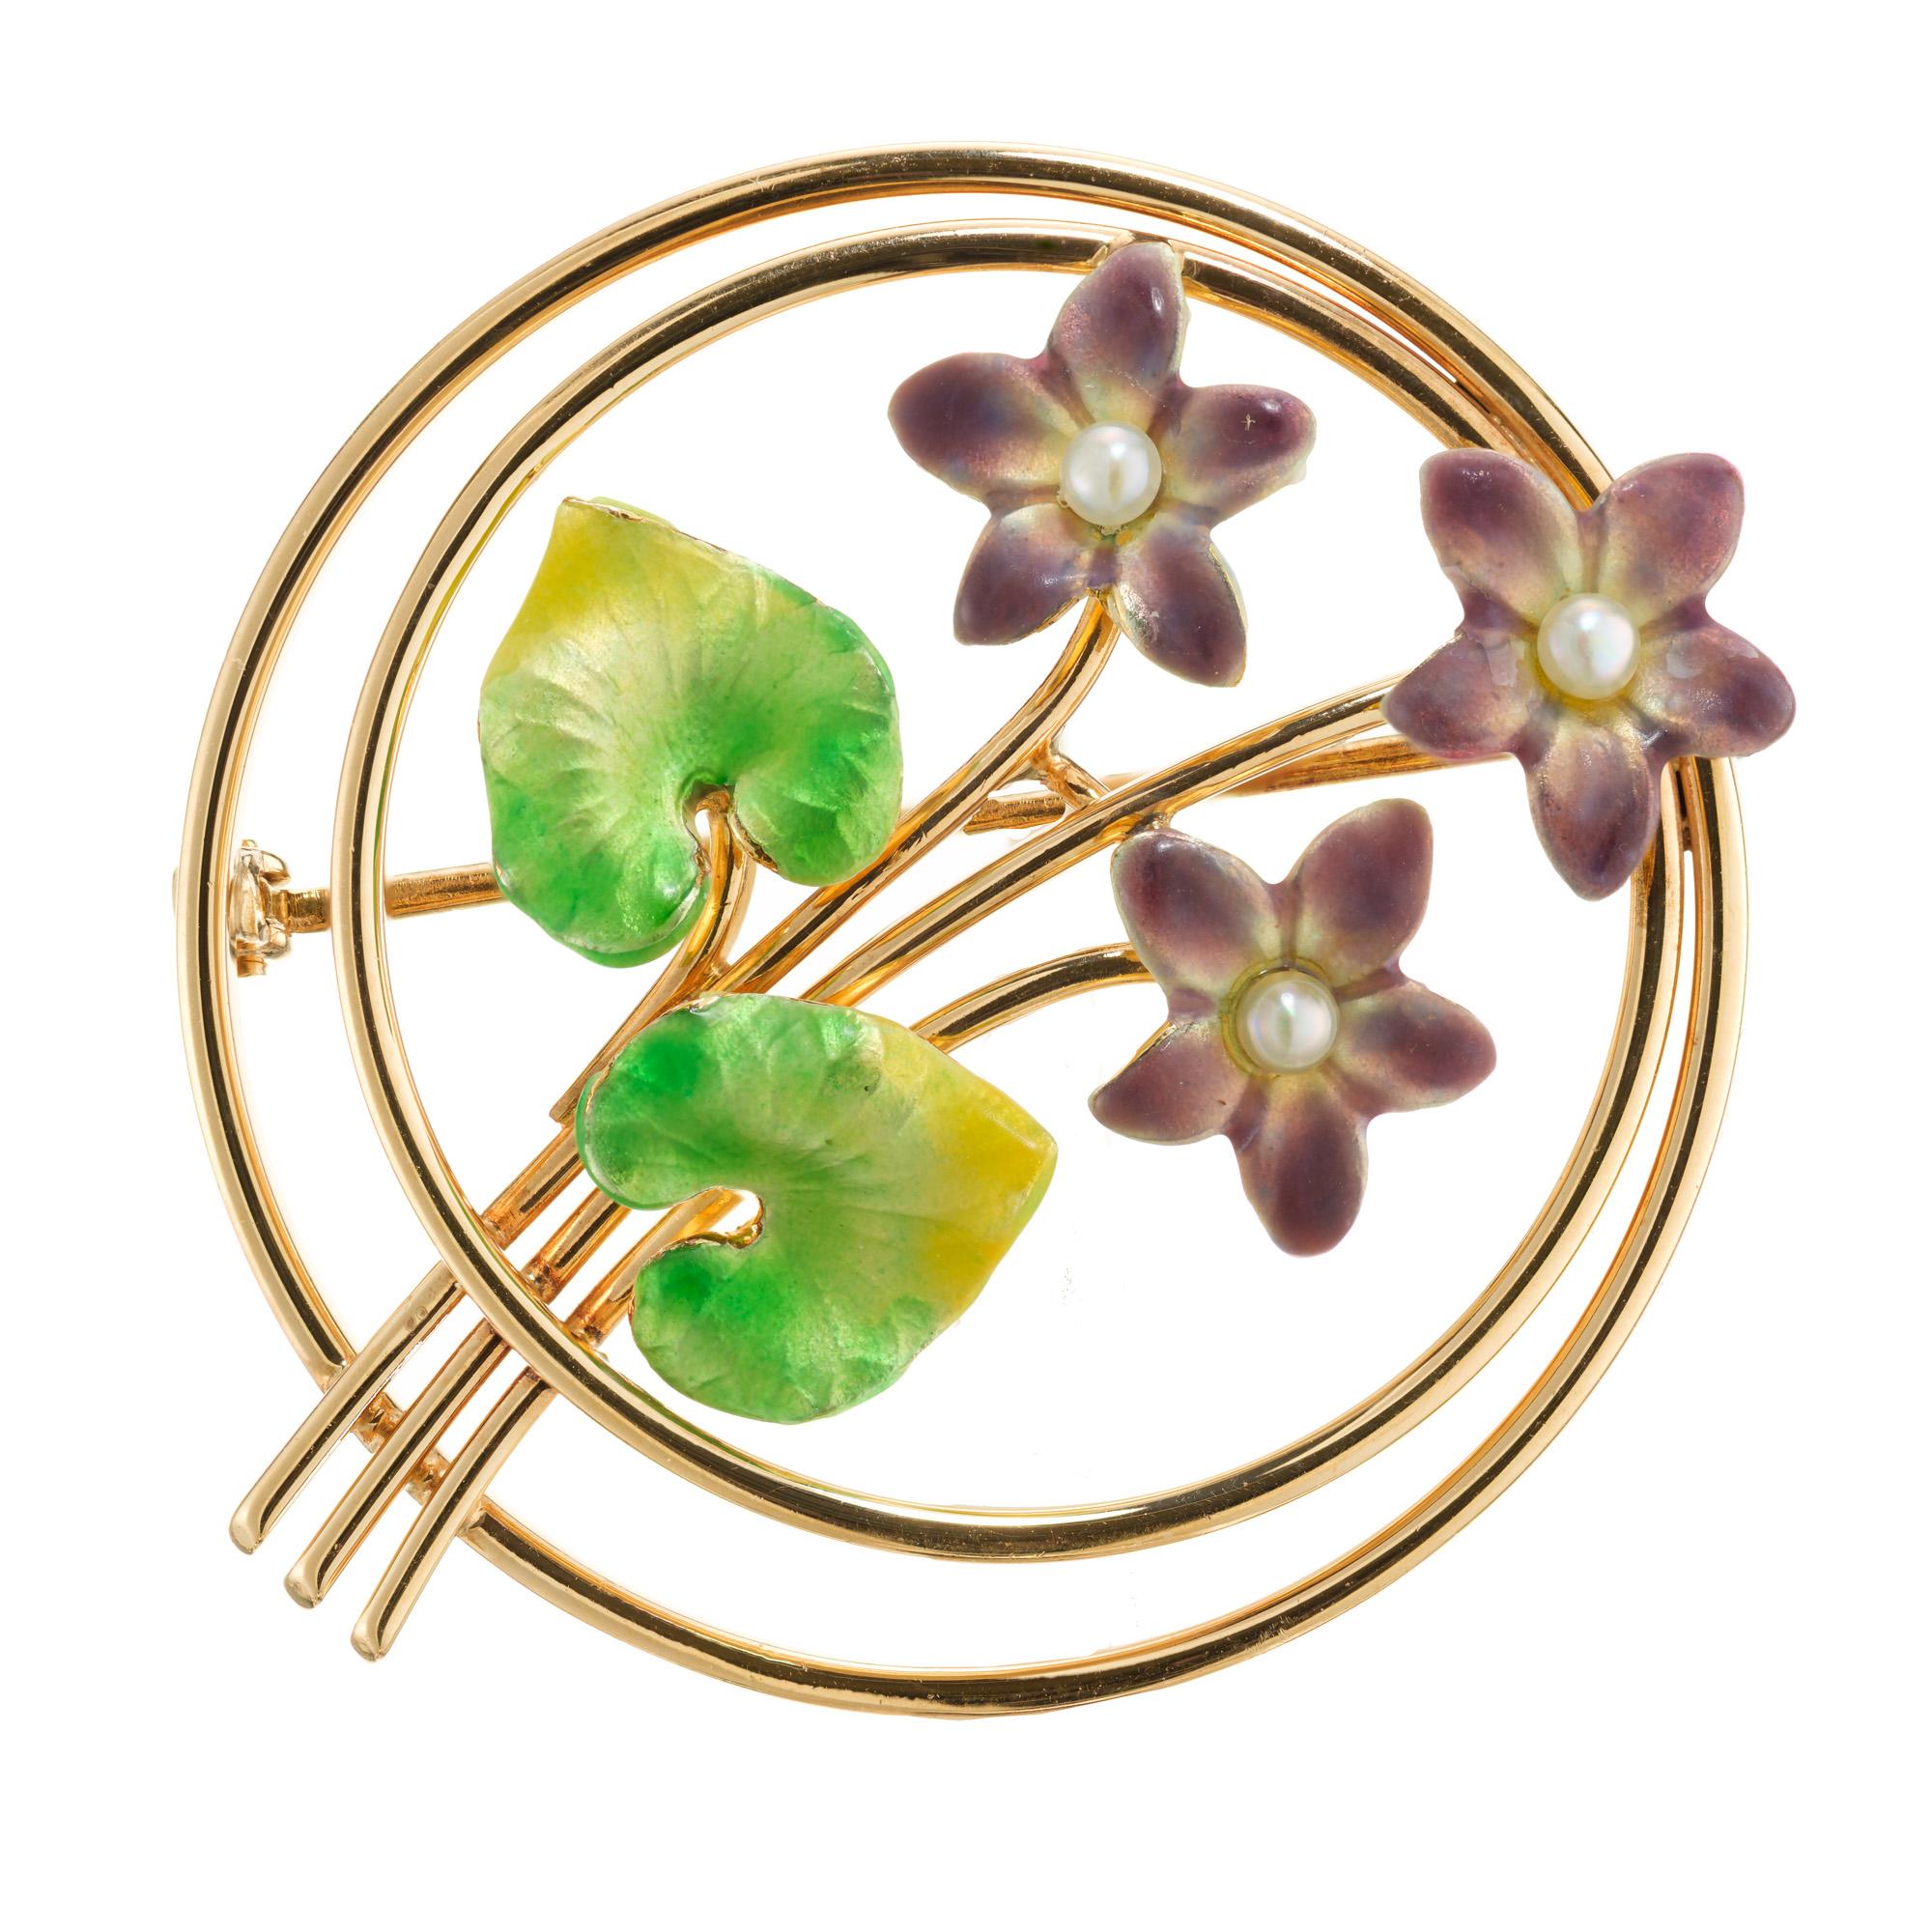 Taille ronde Krementz Broche fleur en or rose, perles, émail et perles en vente